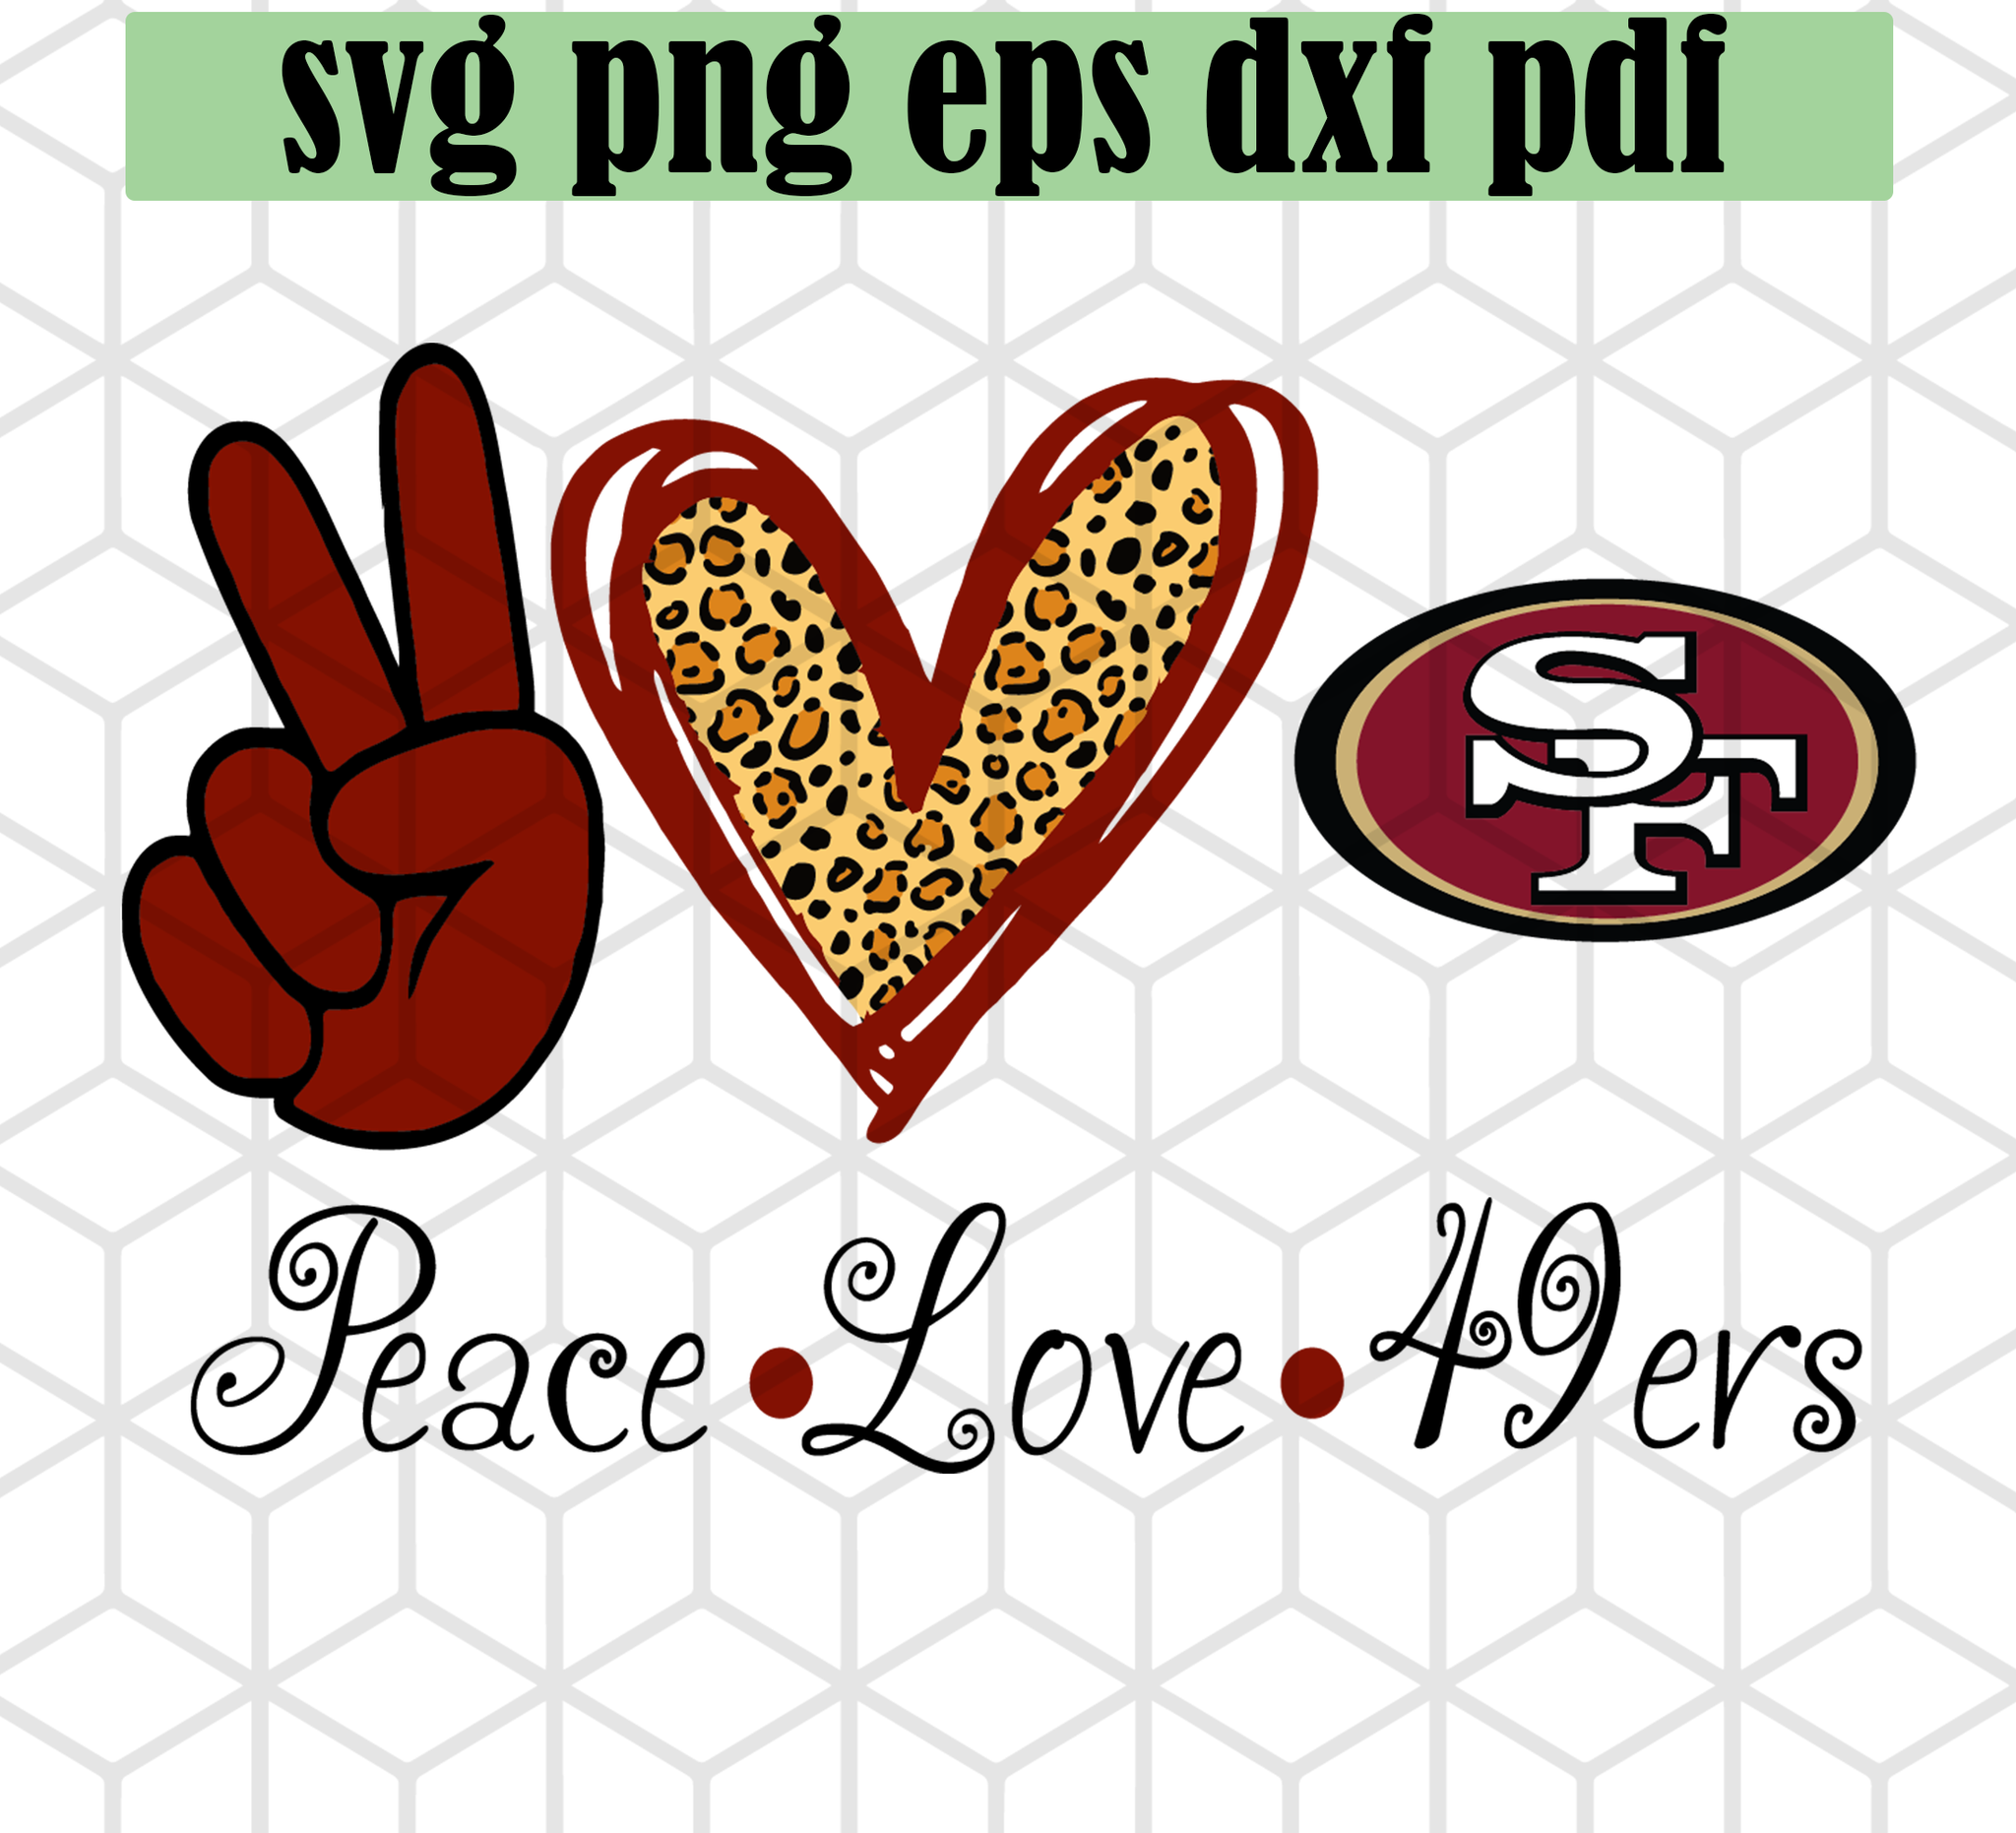 Free Free 184 Love God Love People Svg SVG PNG EPS DXF File